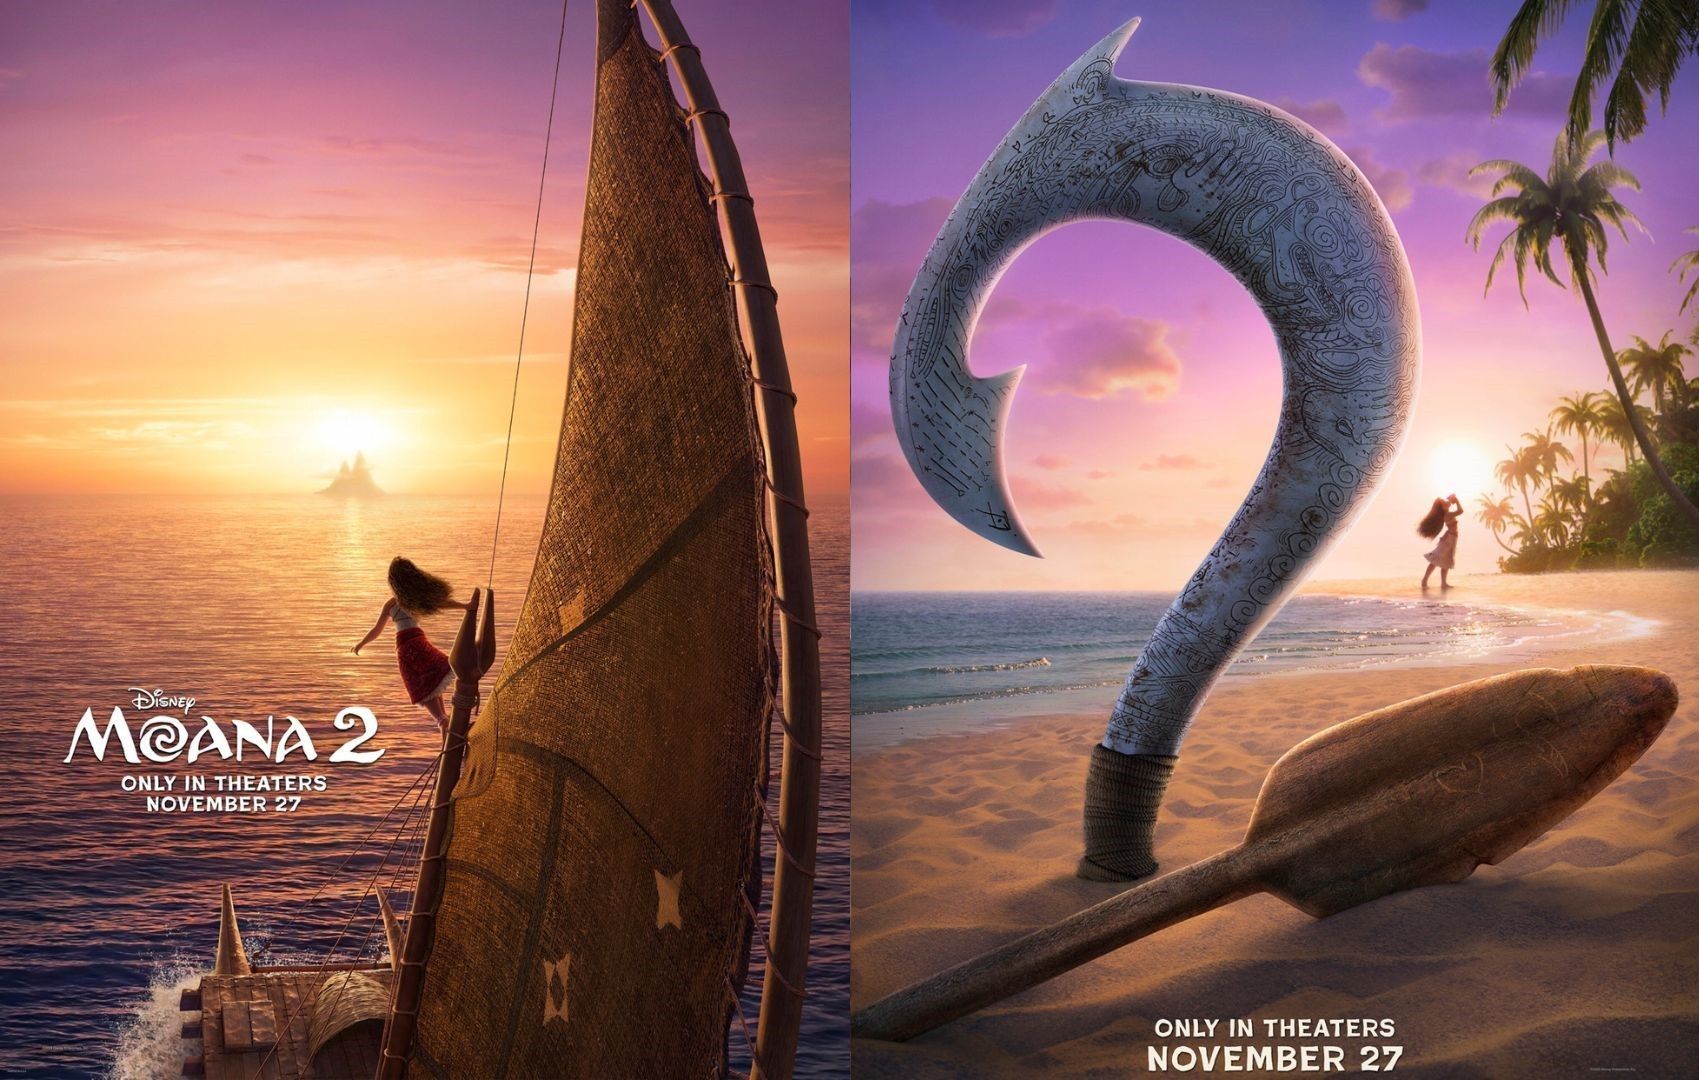 WATCH: Disney drops 'Moana 2' teaser trailer